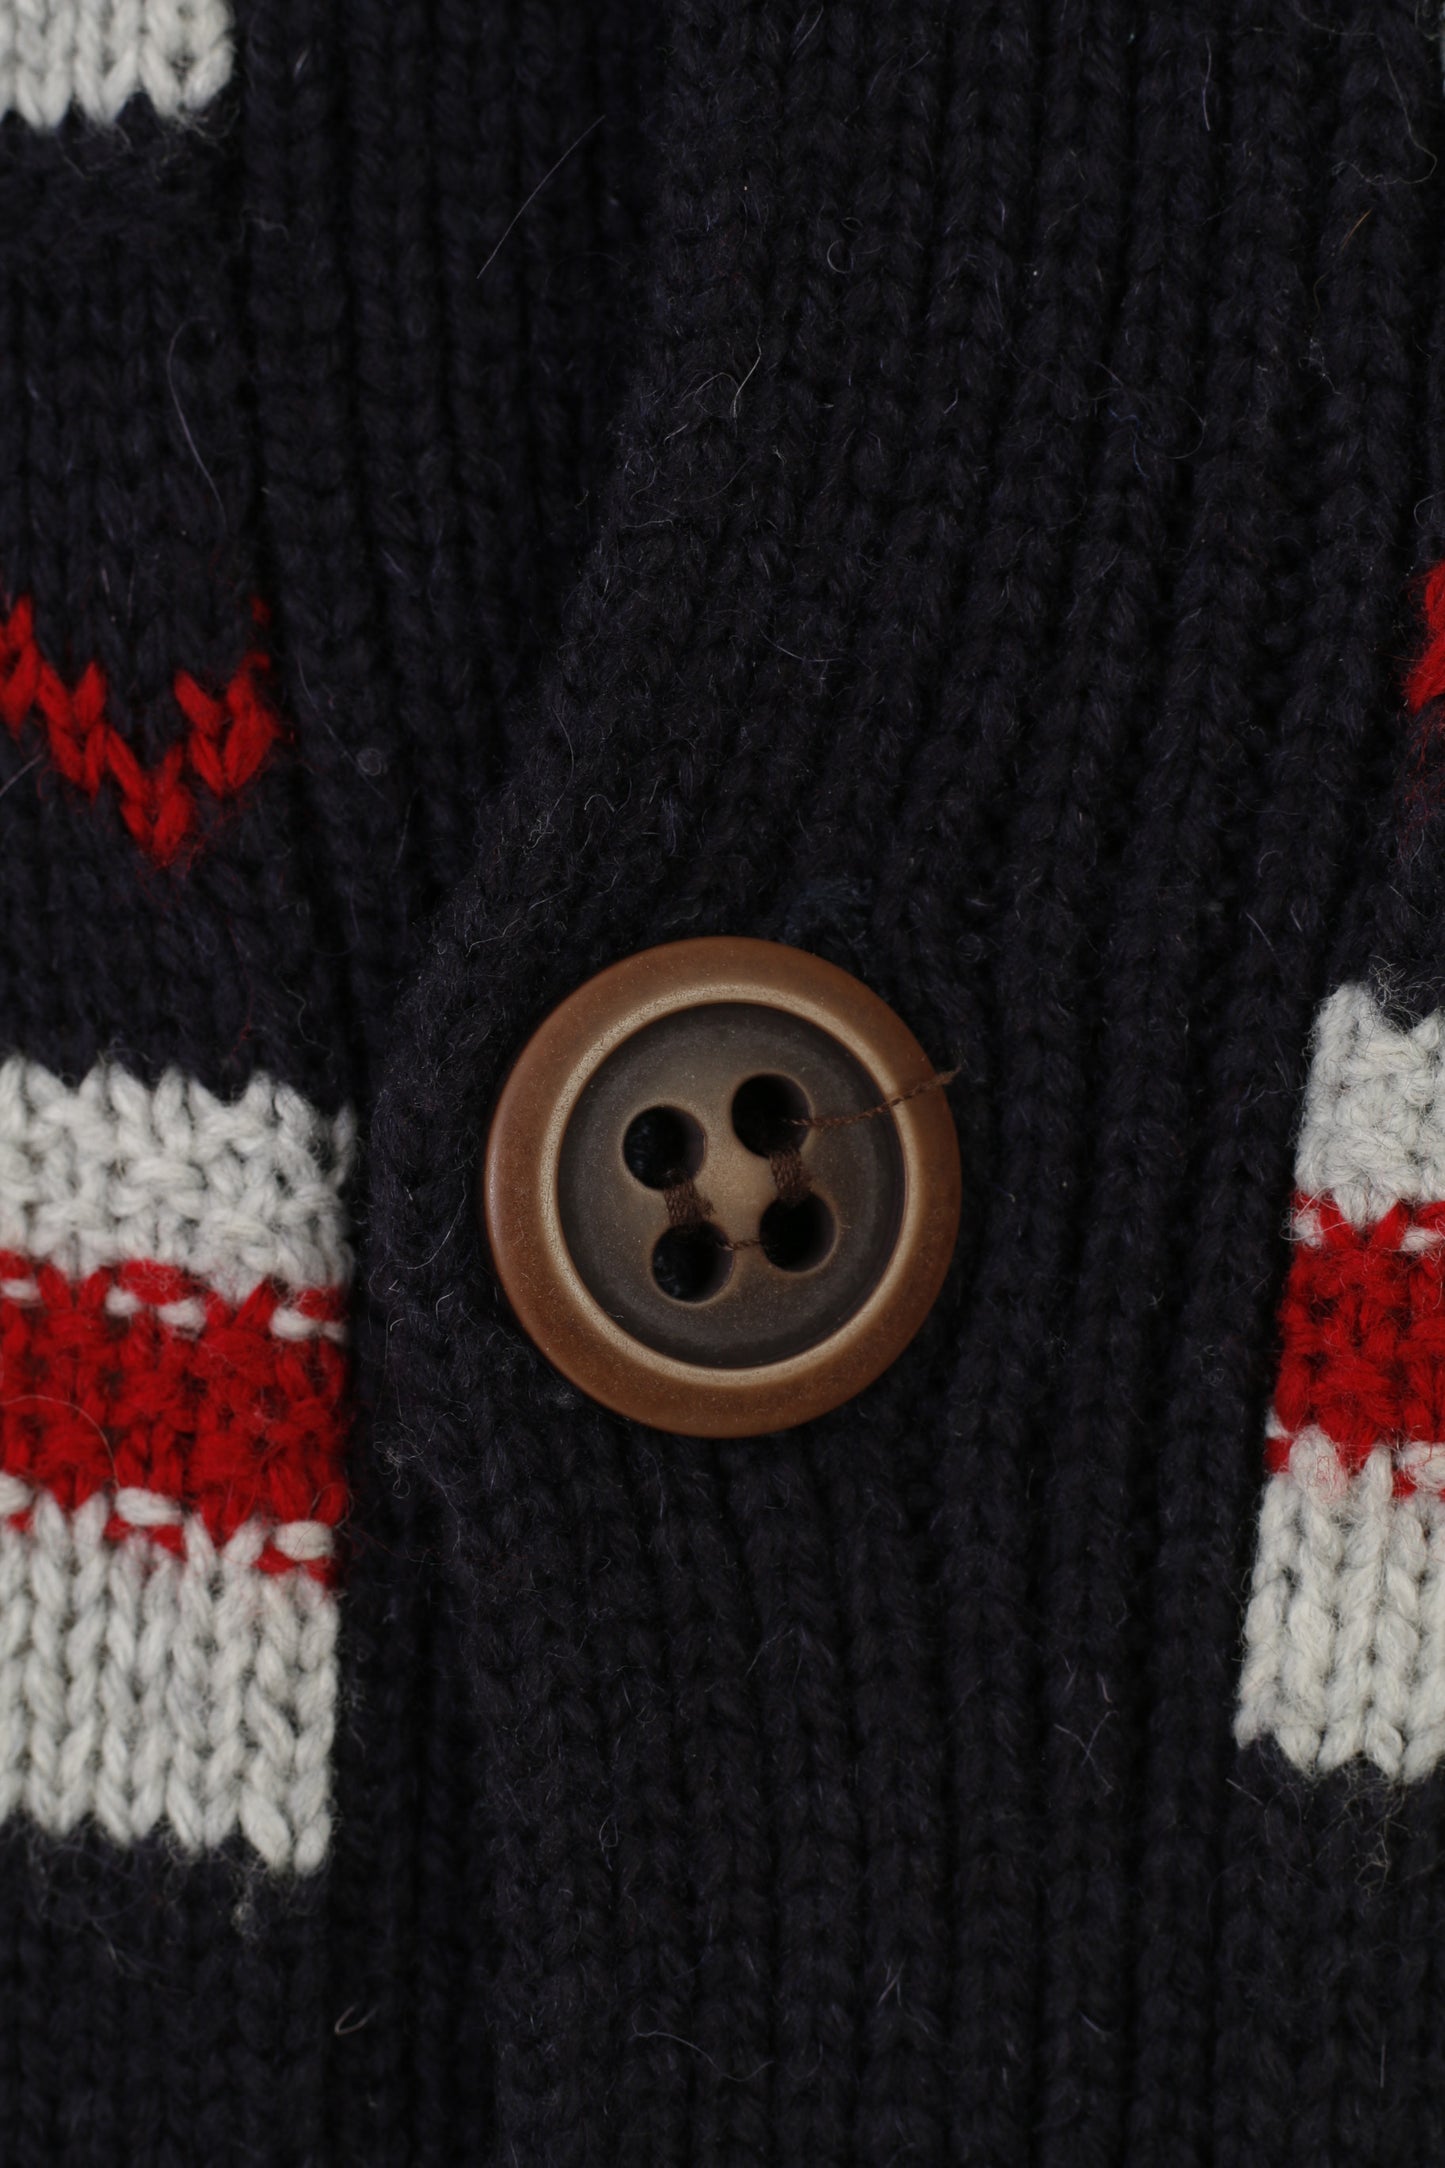 H.J.H Hampton Men M Jumper Navy Padded Tradition Vintage Acrylic Winter Sweater